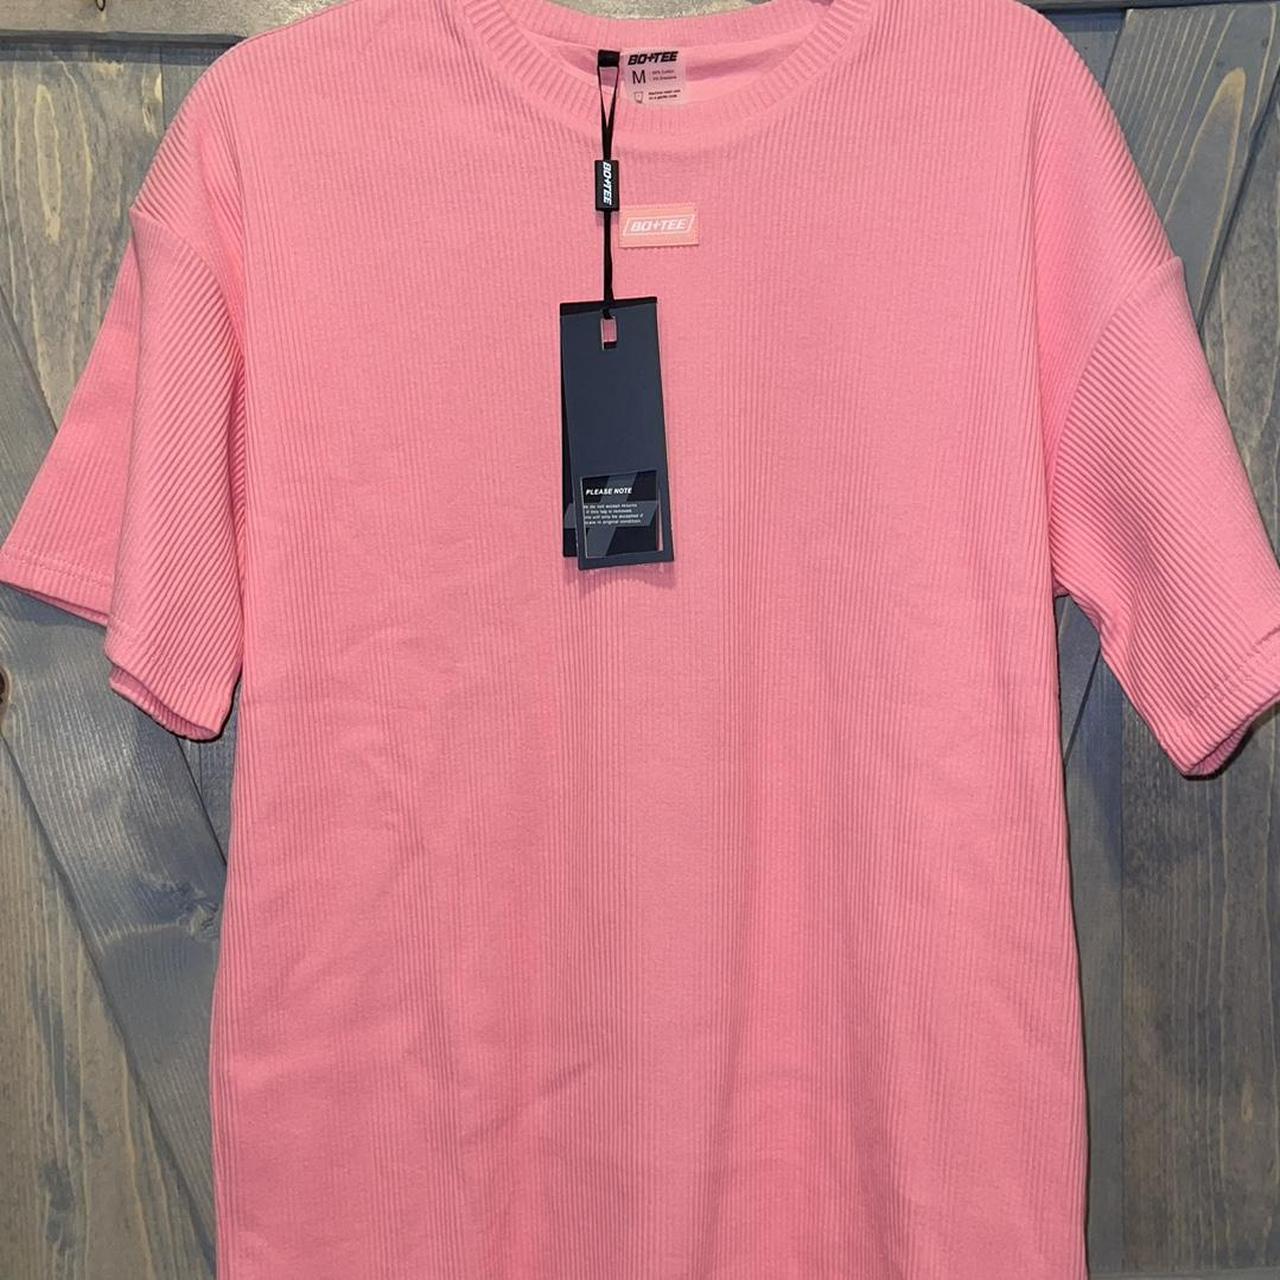 M - CORAL PINK BO+TEE t-shirt dress!! Originally $62. - Depop